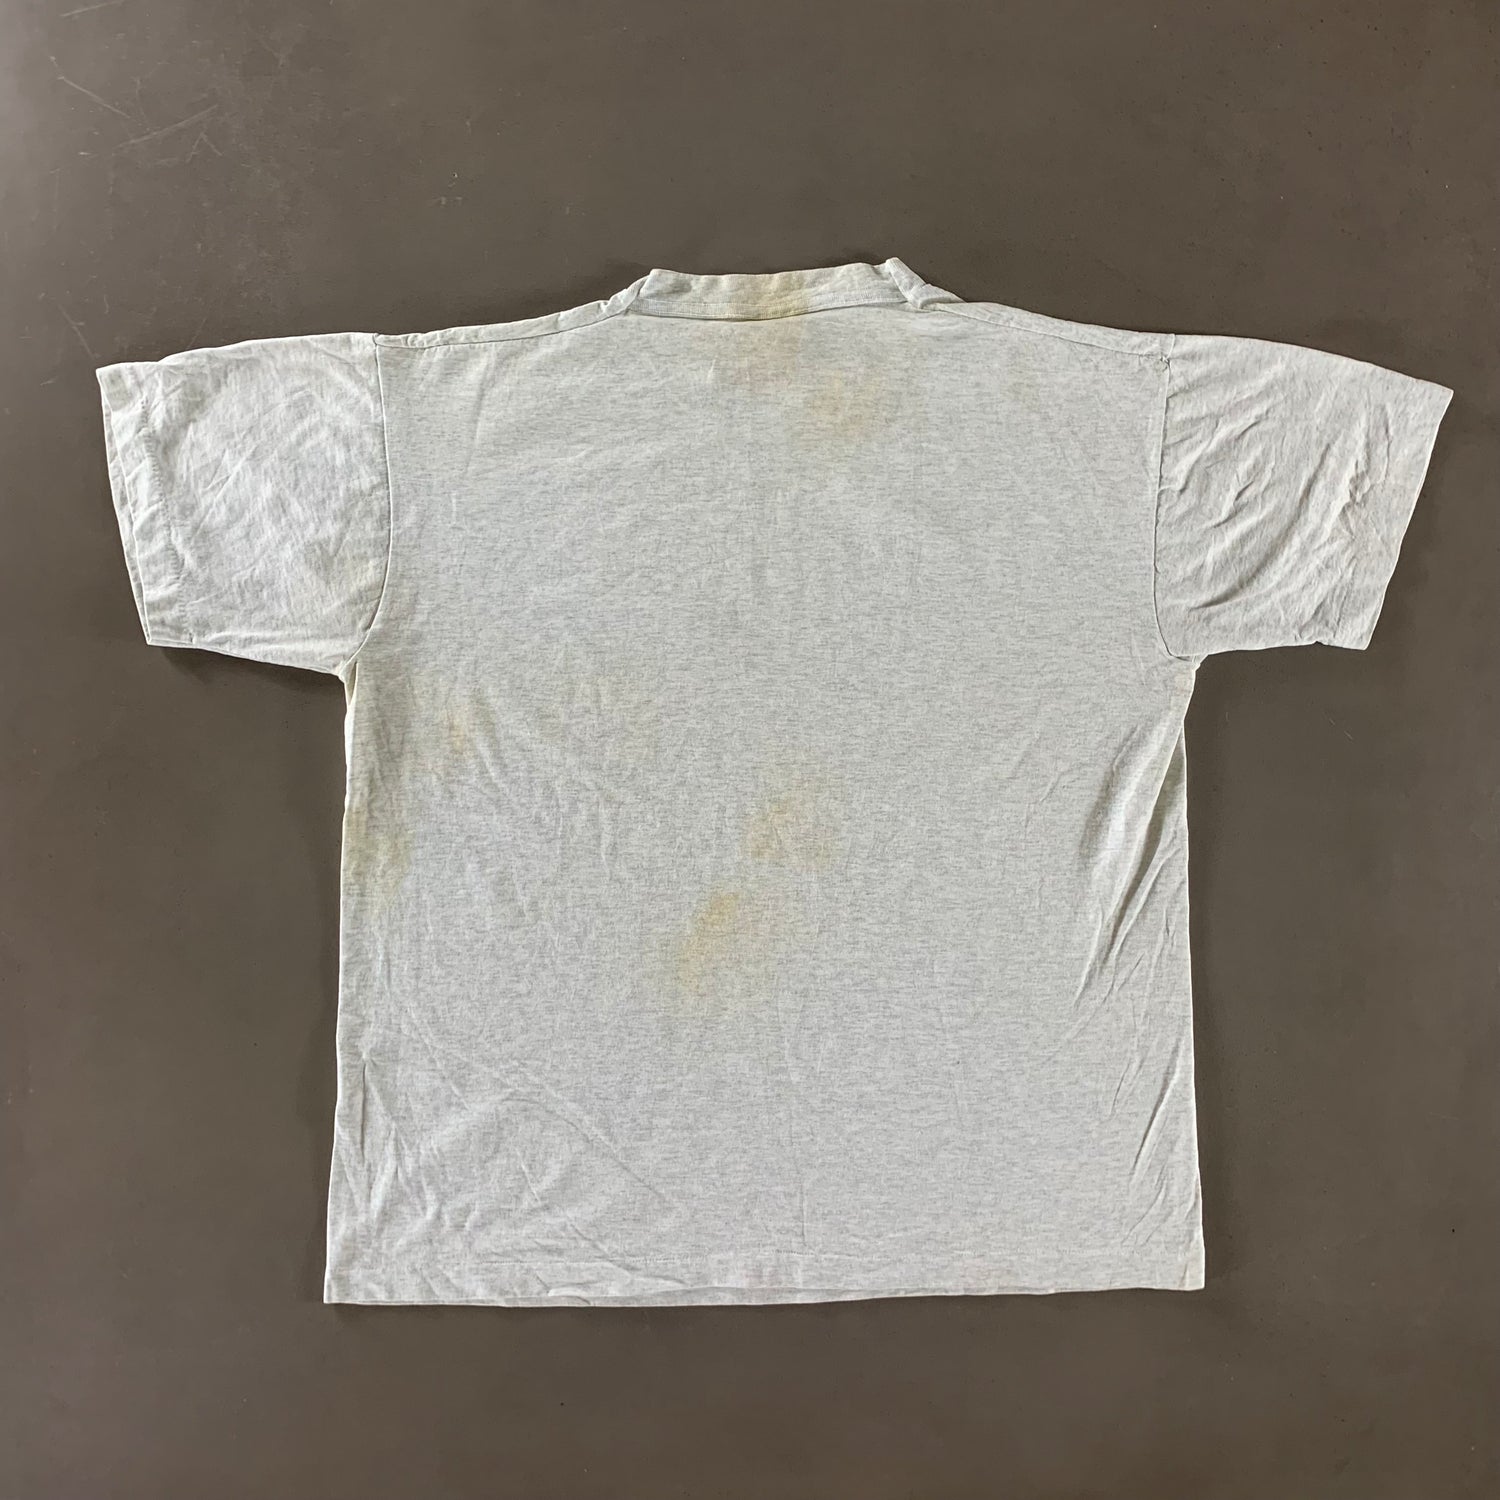 Vintage 1990s Michigan T-shirt size XL